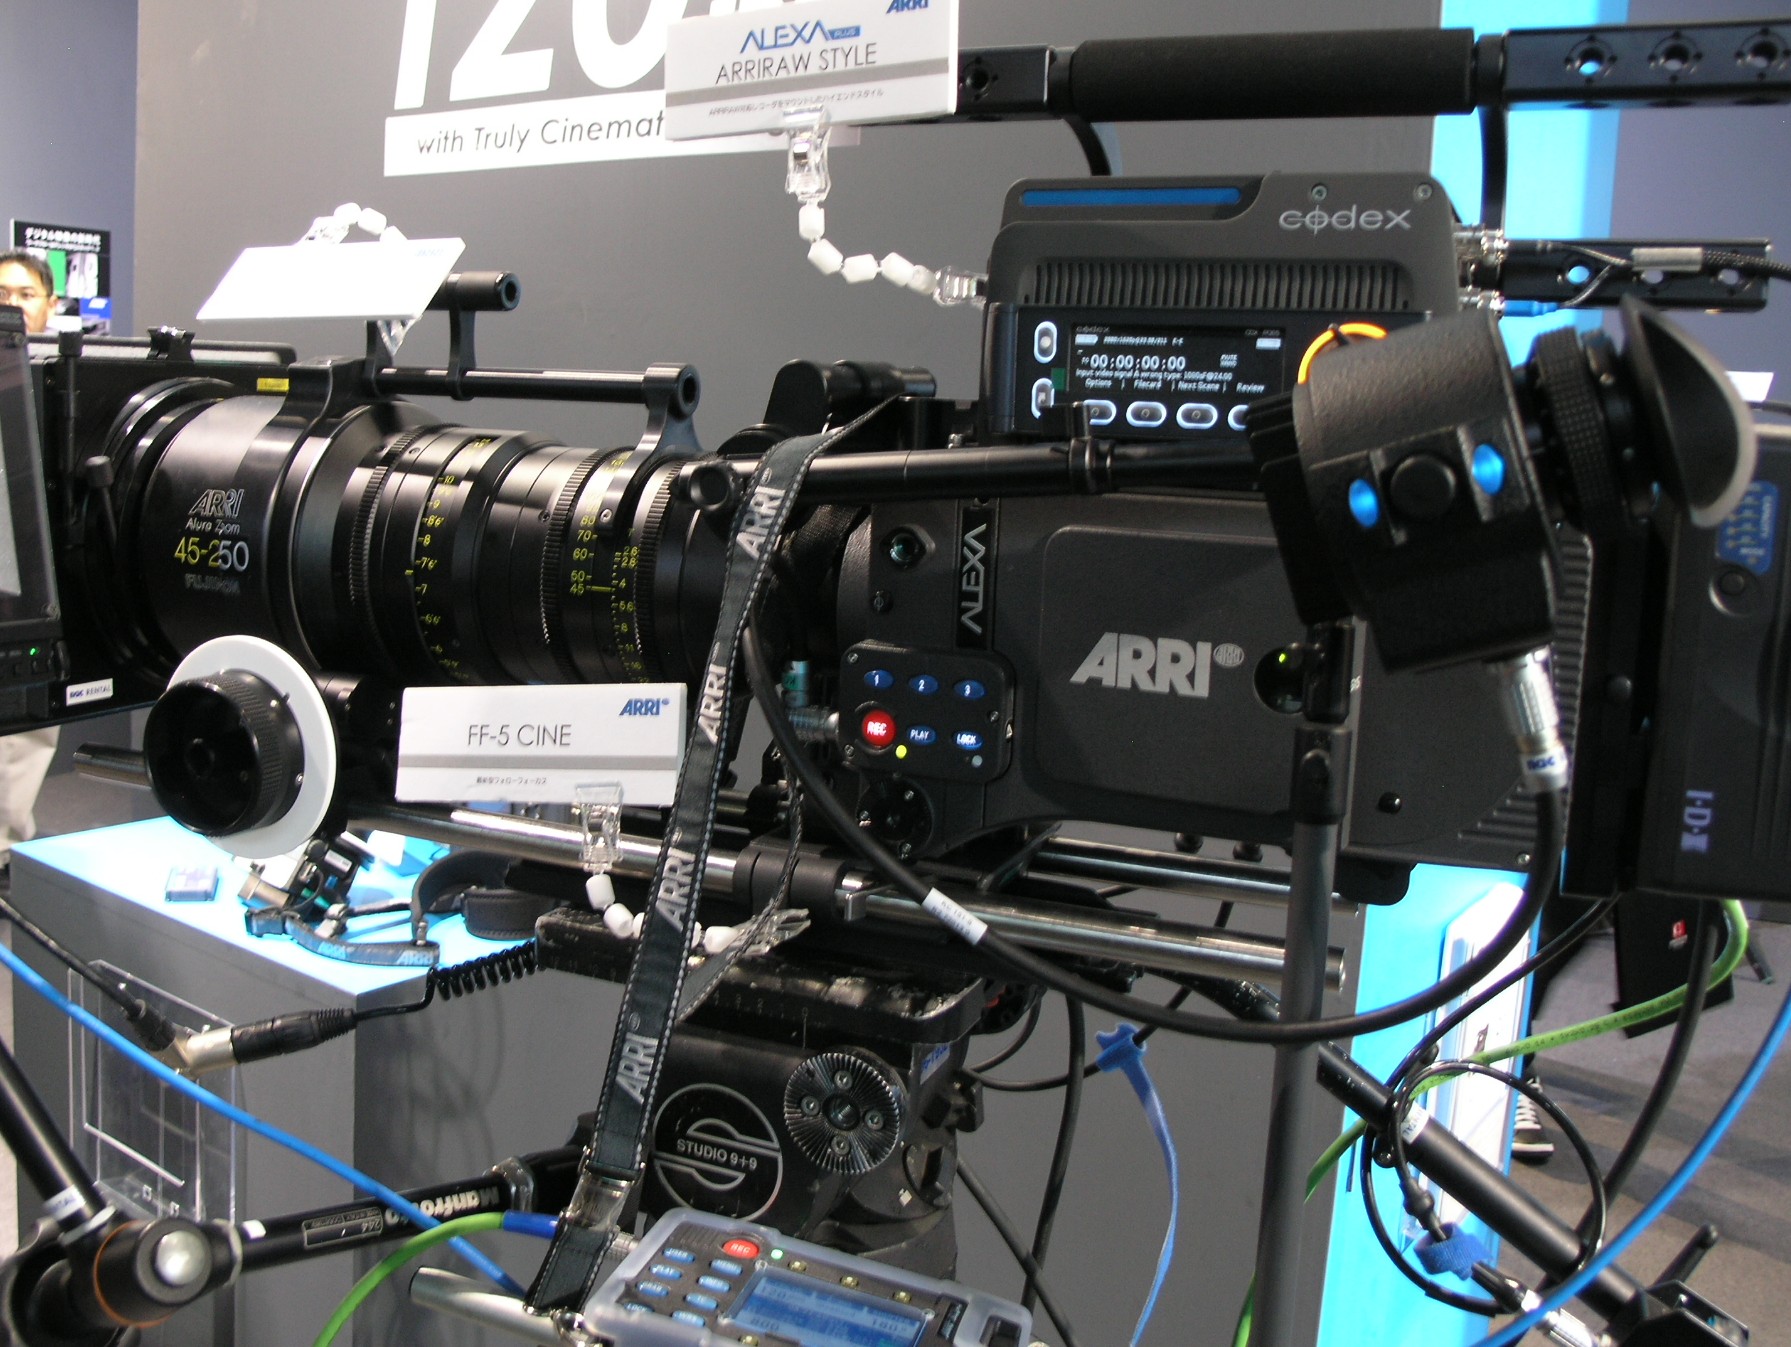 Film-like high quality, high functionality camera ALEXA (Nac)